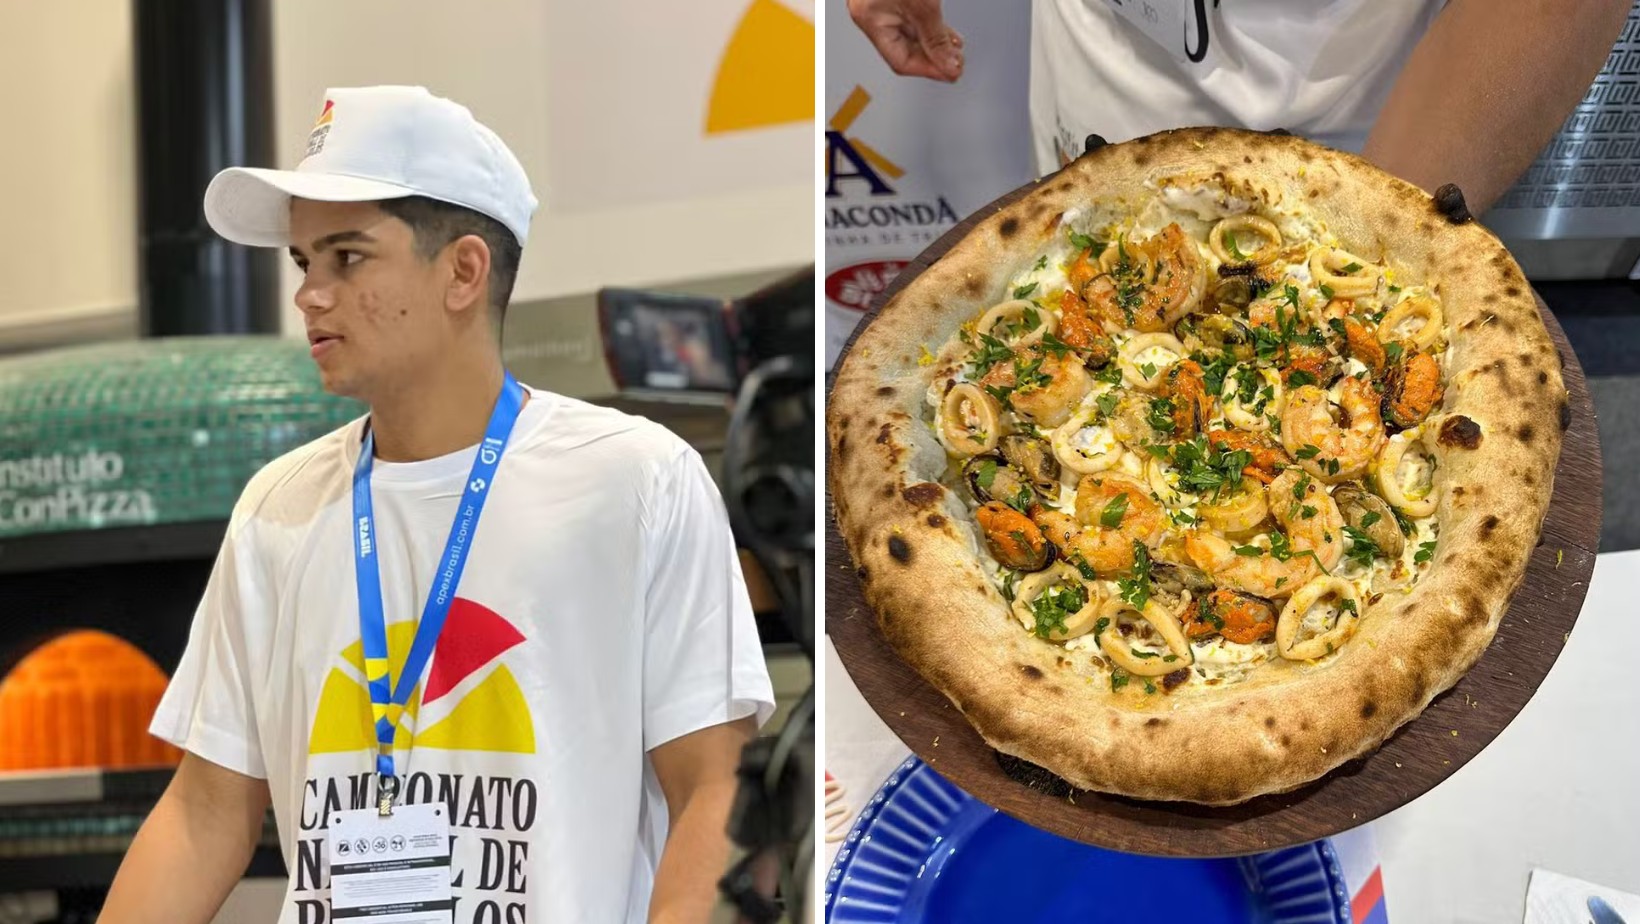 Pizzaiolo do litoral de SP conquista título nacional e vai representar o Brasil no 'mundial da pizza' nos EUA